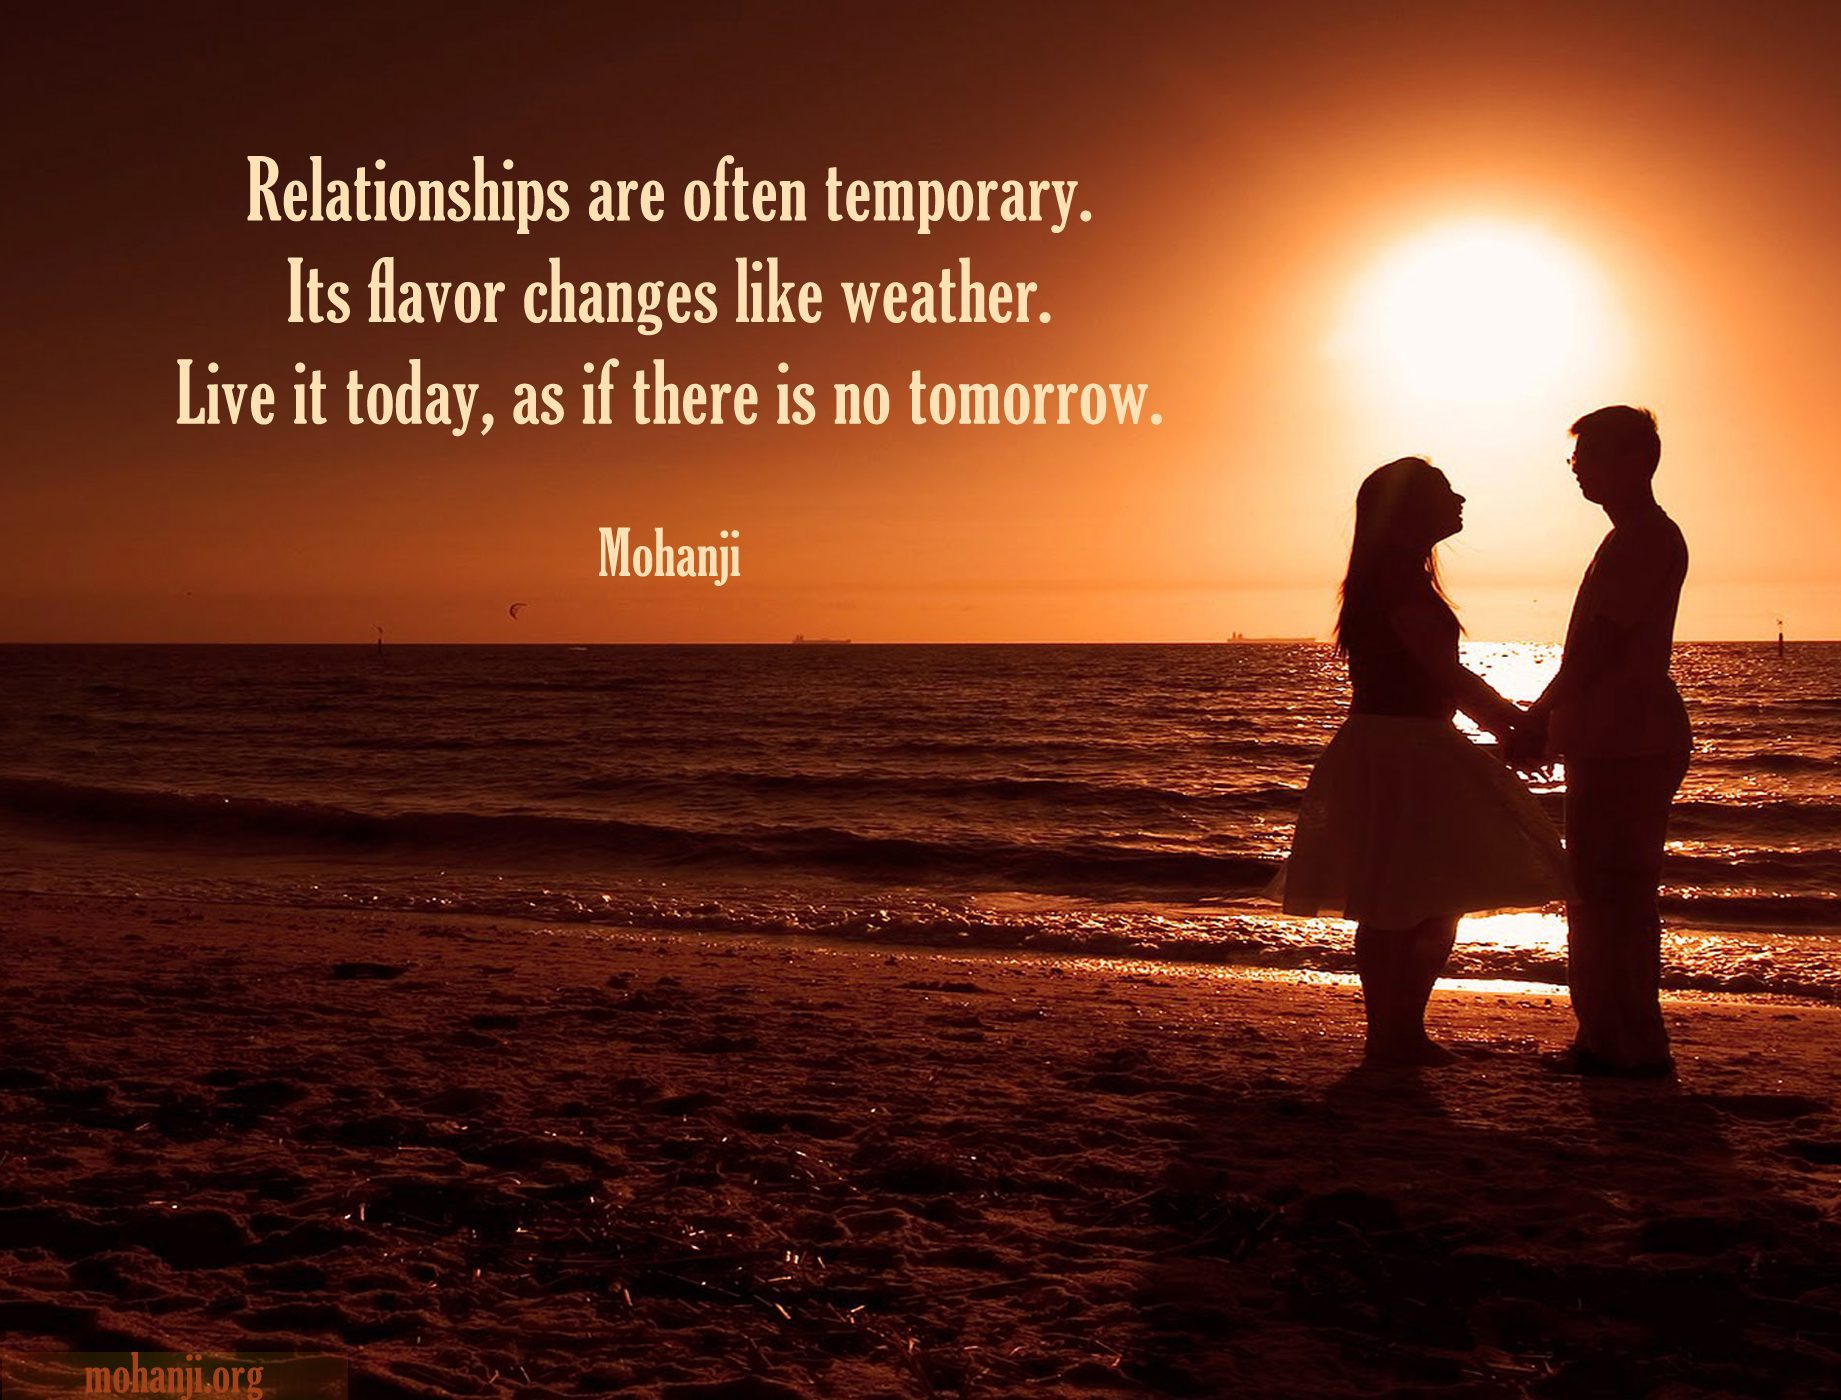 Mohanji quote - Relationship 2